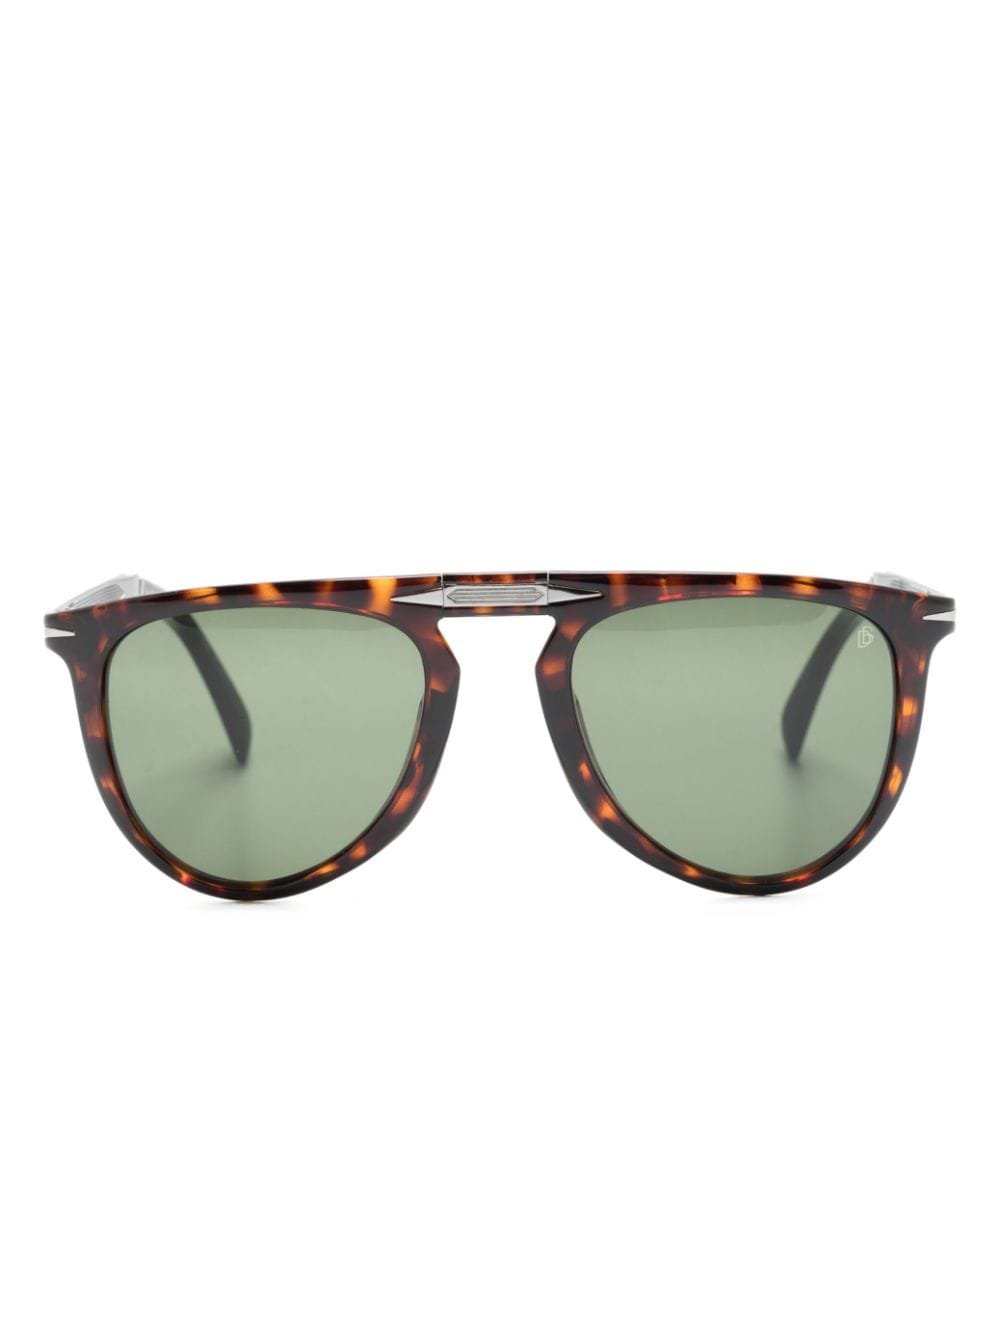 Eyewear by David Beckham tortoiseshell pilot-frame sunglasses - Brown